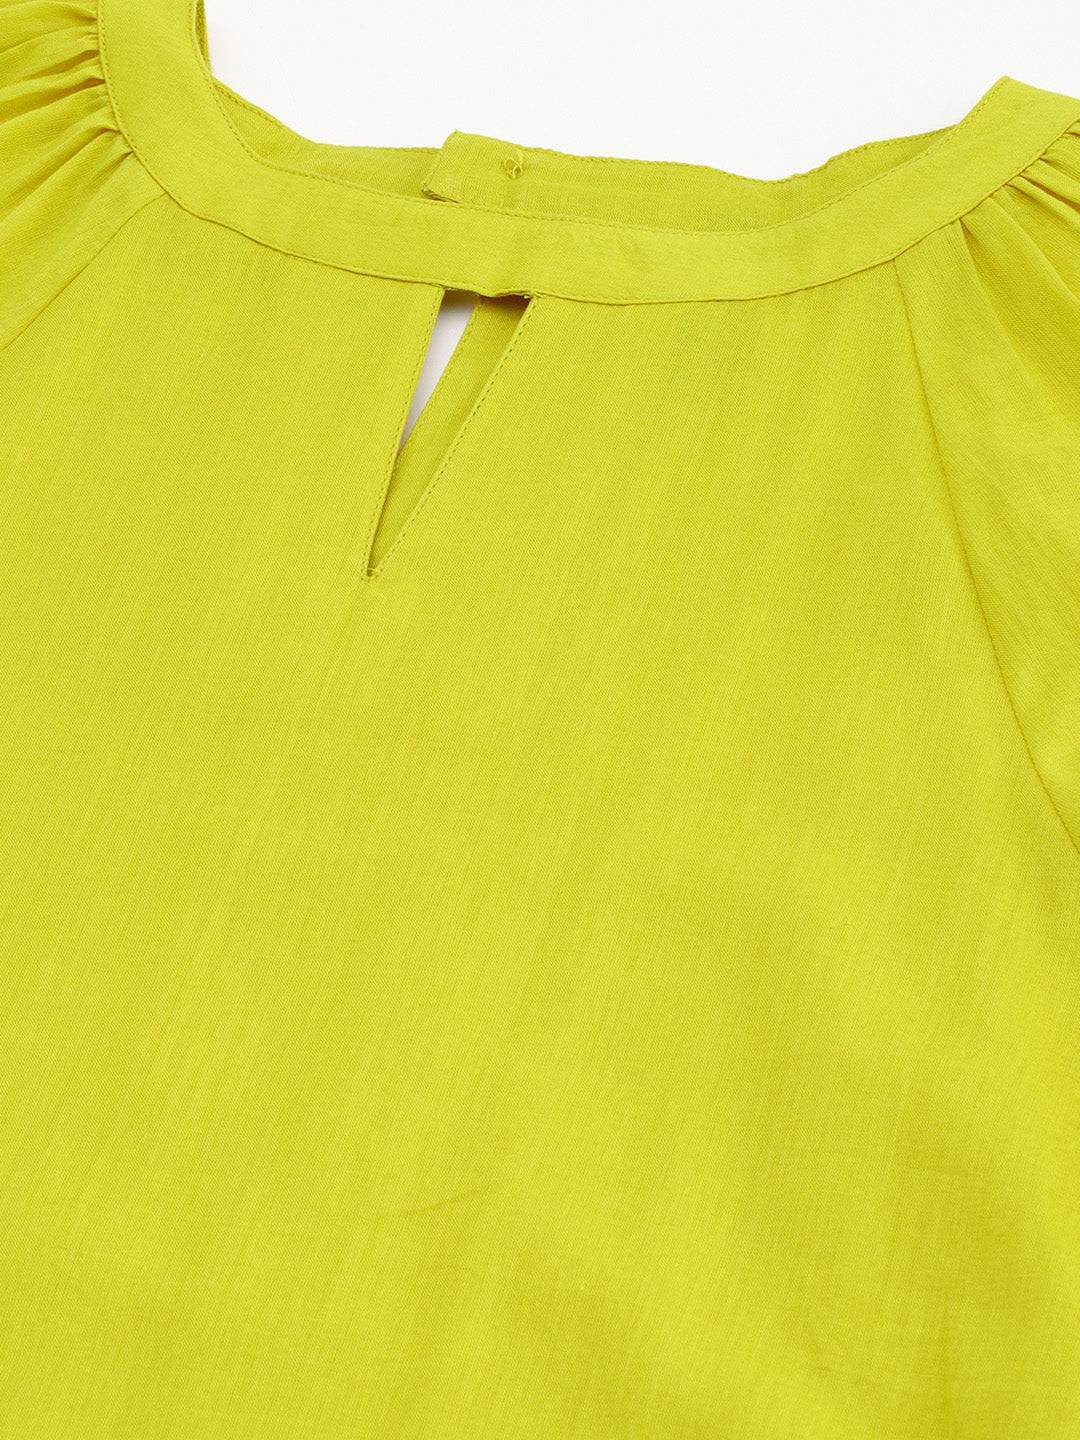 Women's Solid Mustard Cotton Dress - Janasya